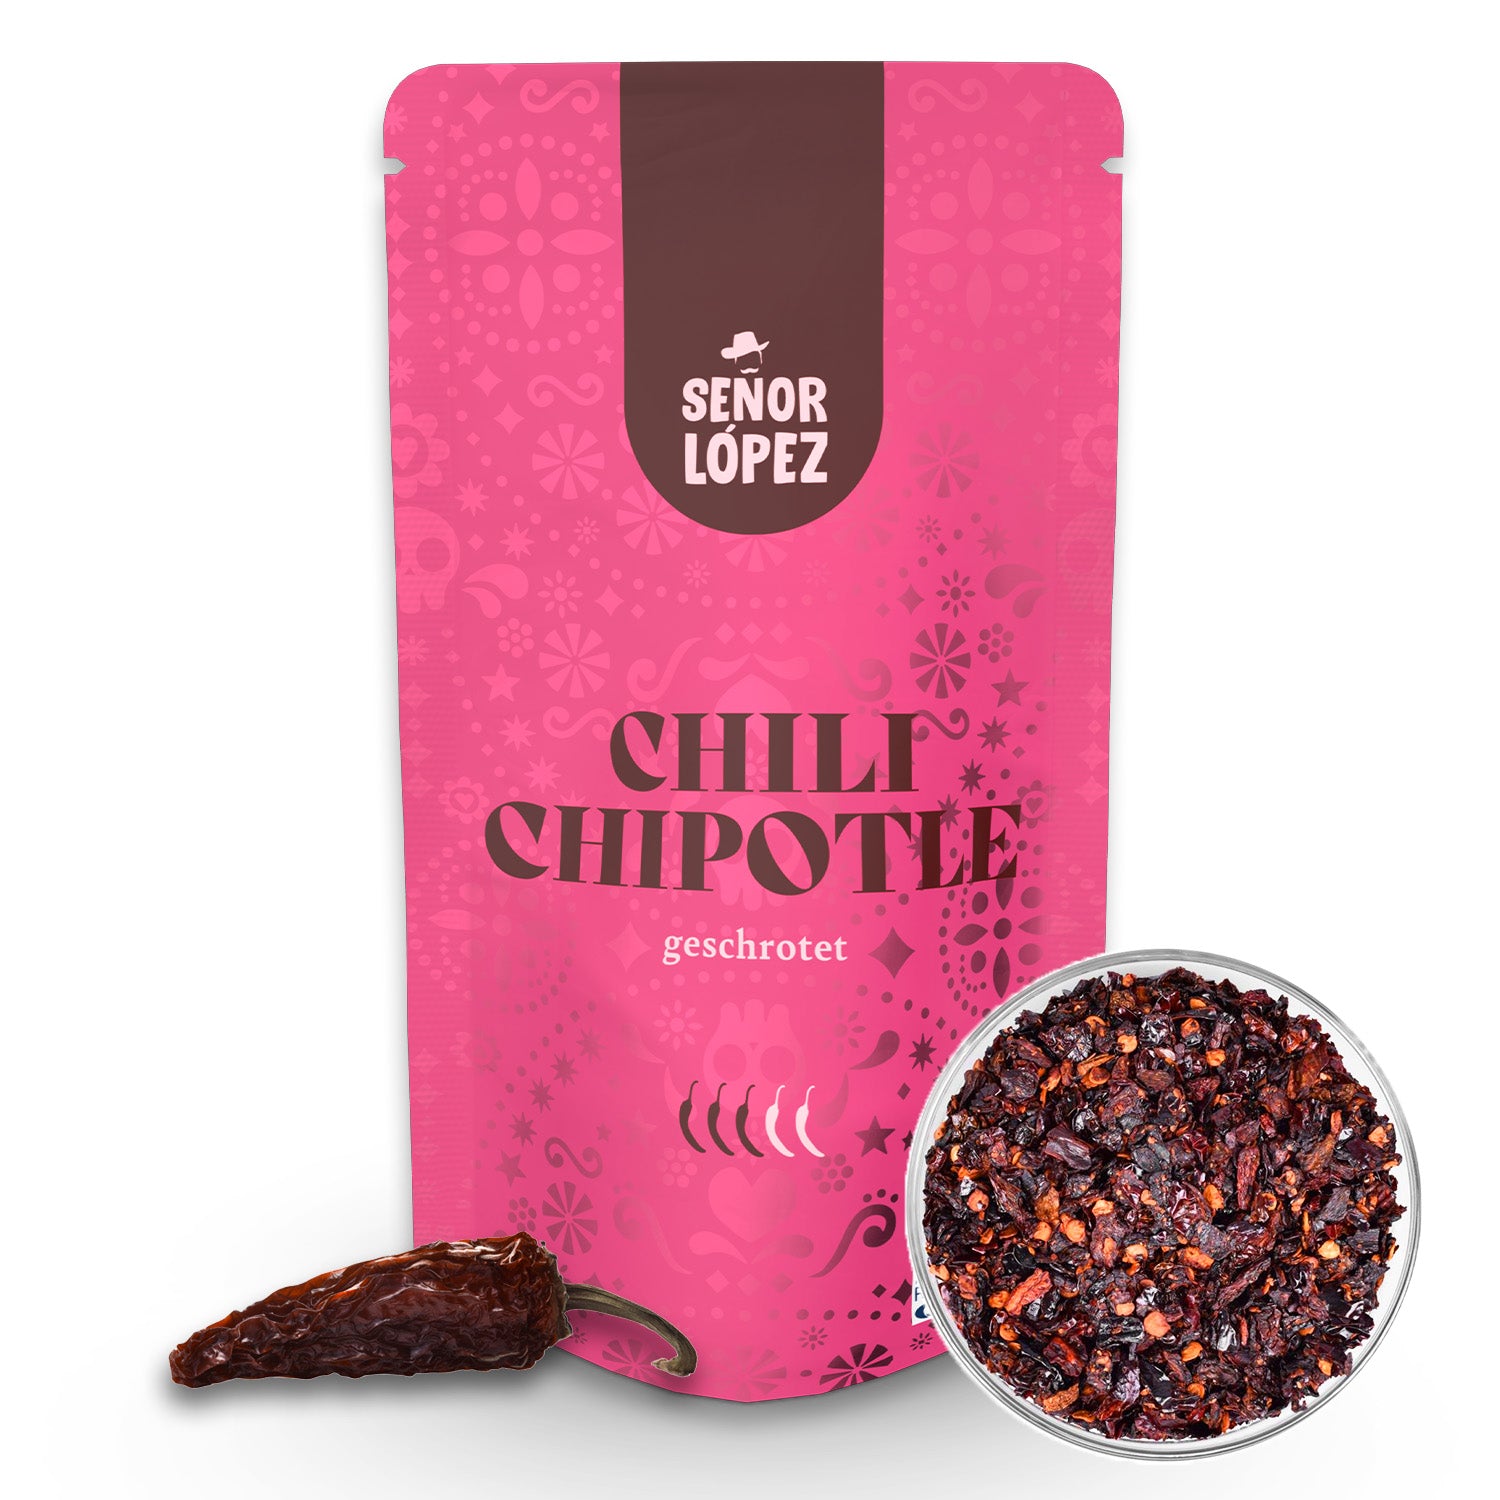 Señor López Chipotle Chili geschrotet 30 g